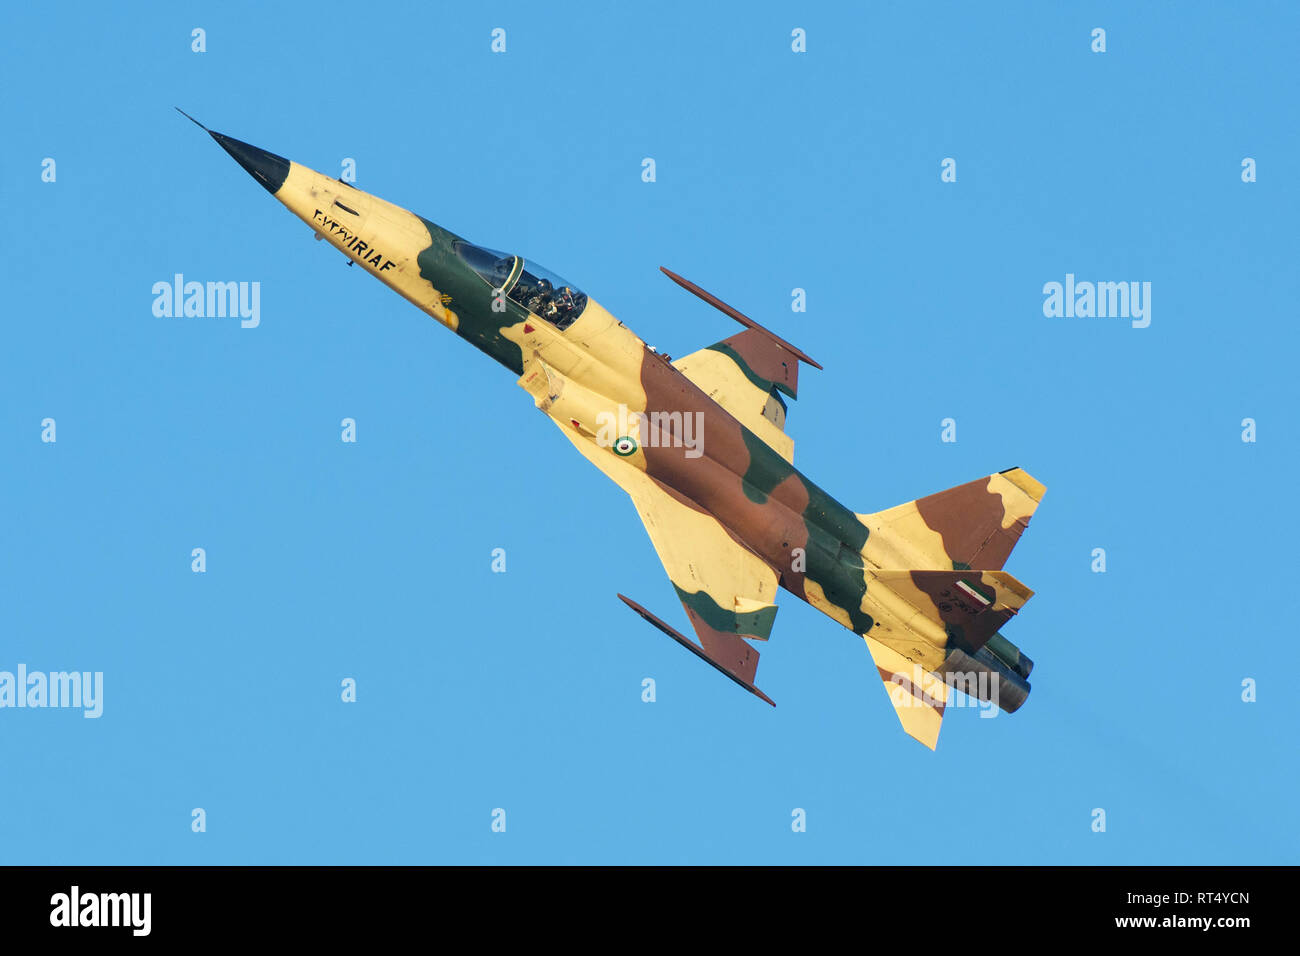 An Islamic Republic of Iran Air Force HESA Saegheh I aircraft in flight. Stock Photo